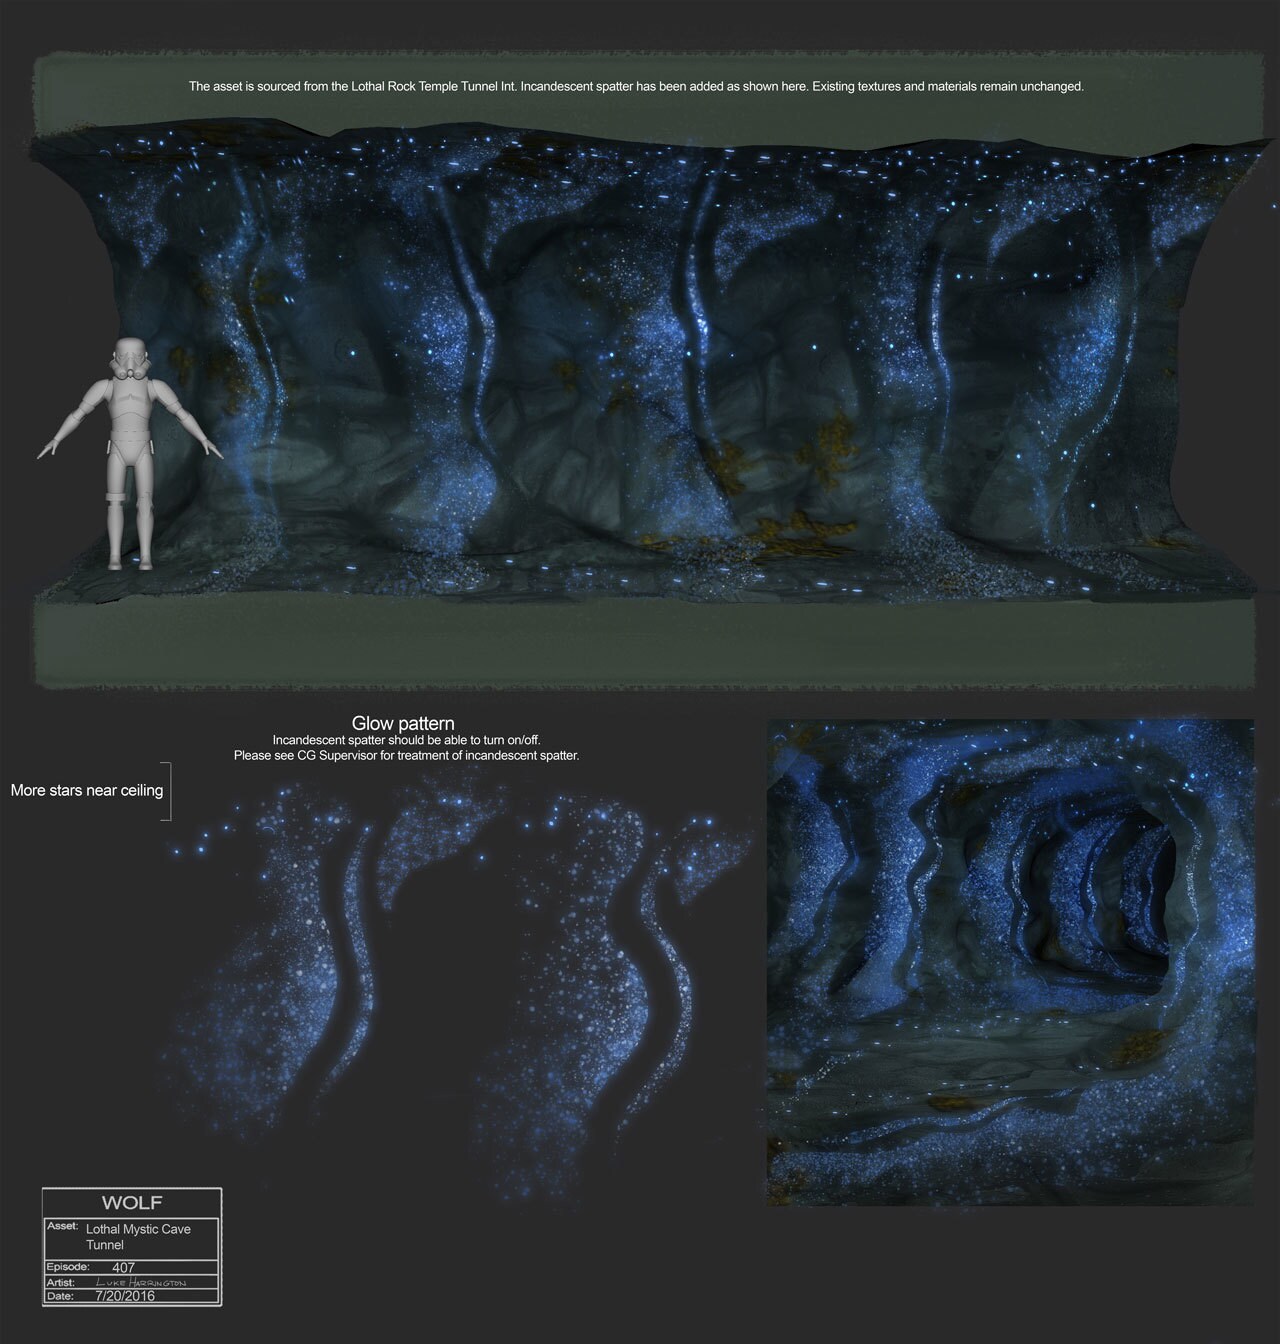 Lothal mystic cave tunnel concept art by Luke Harrington.